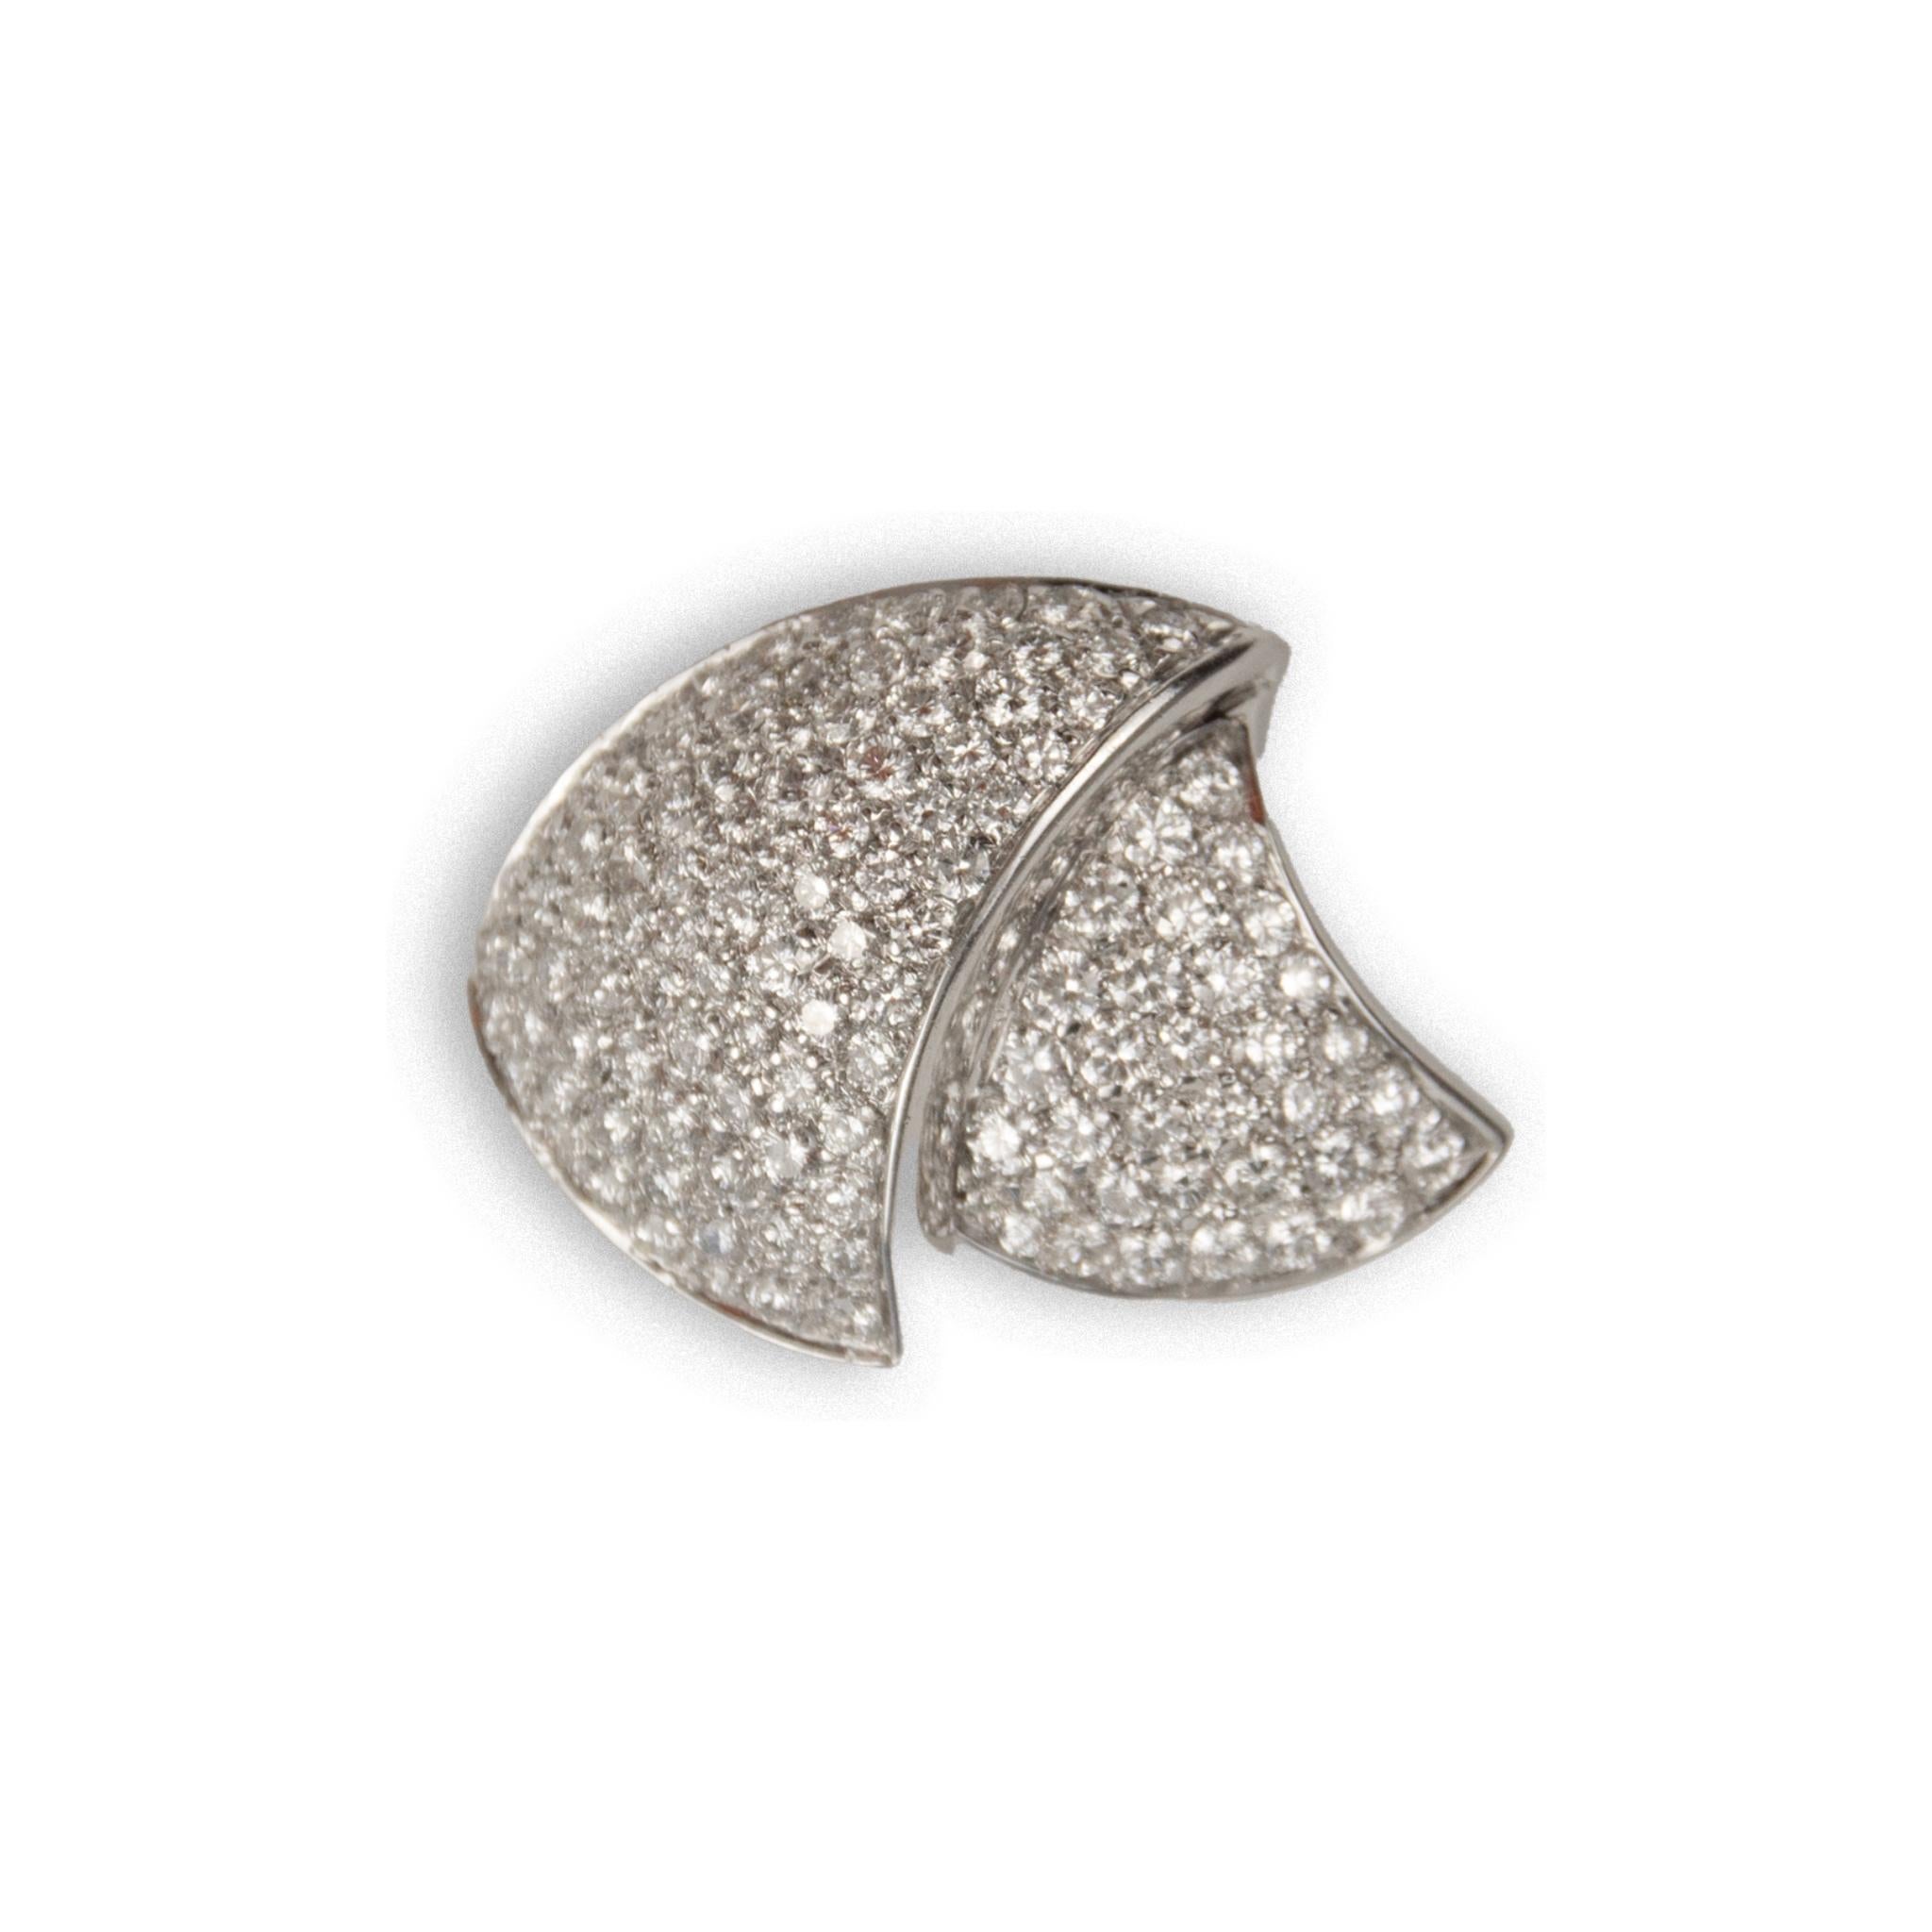 Stefan Hafner Earrings
18K White Gold
Diamonds: 4.94ctw
SKU: BLU01482
Retail price: $31,900.00